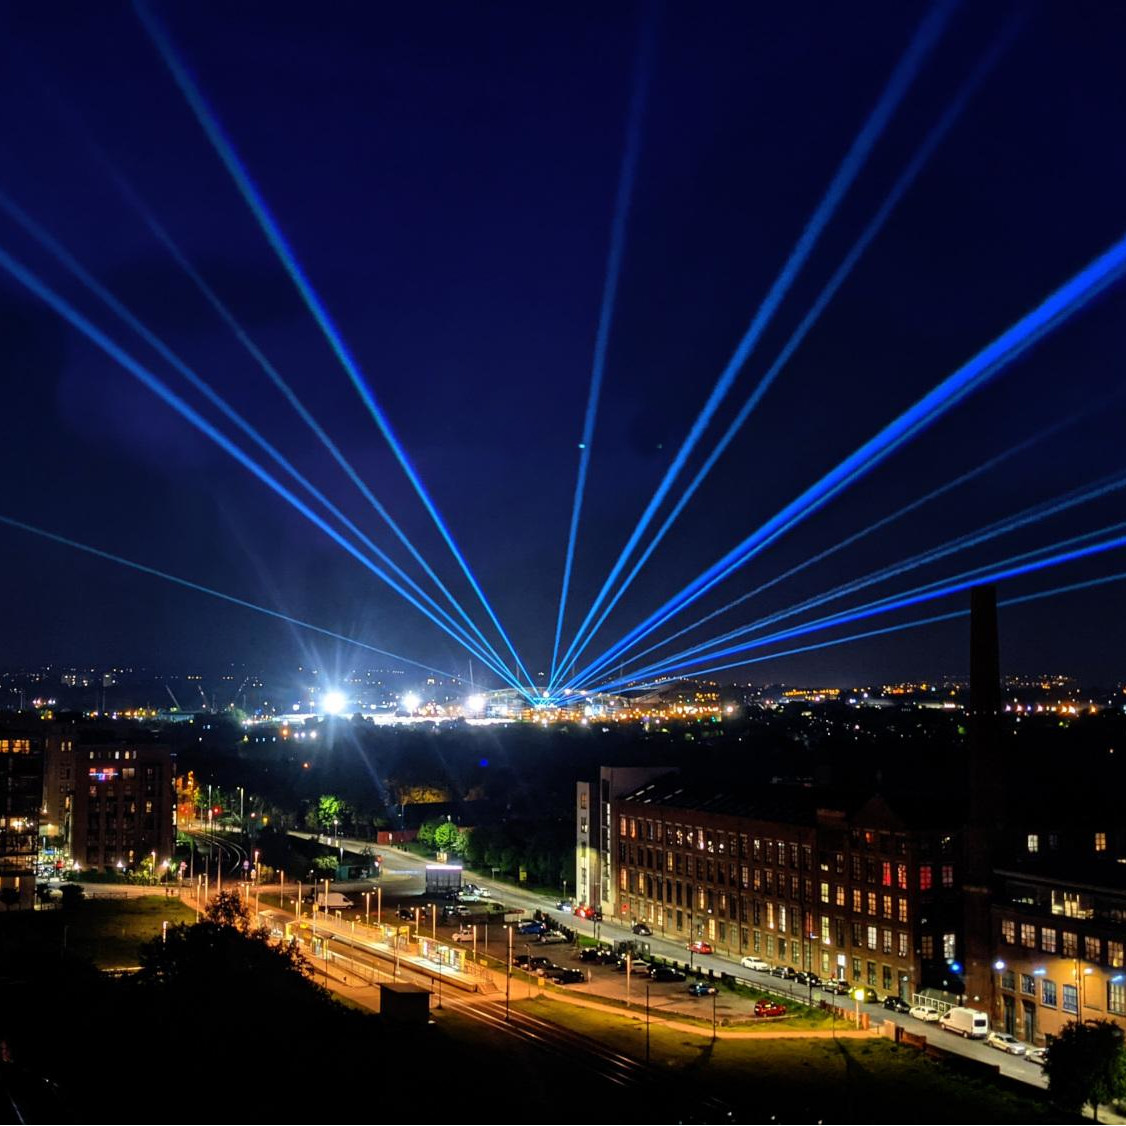 Lazer lights from the Manchester City stadium